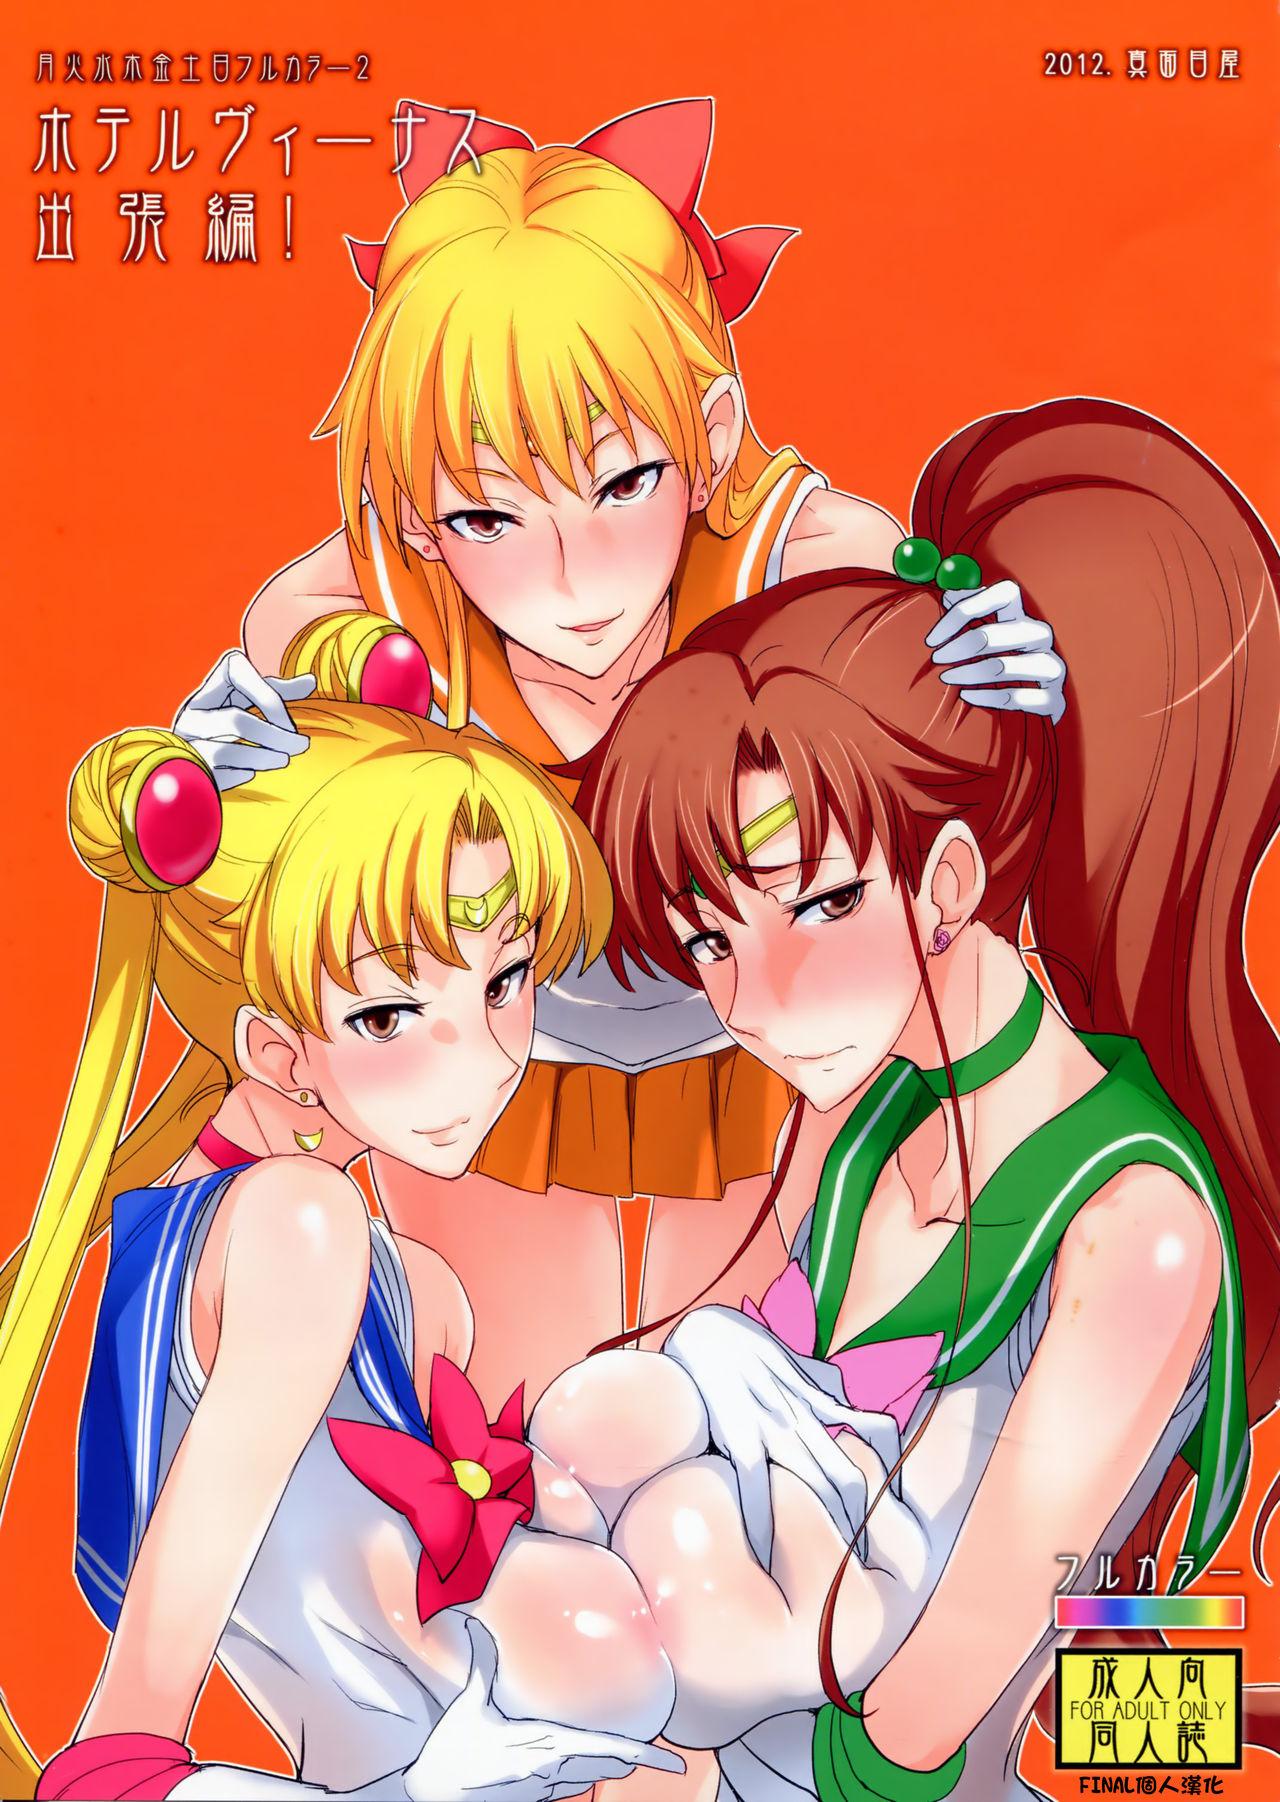 Boobies Getsu Ka Sui Moku Kin Do Nichi 2 - Sailor moon Couple - Picture 1